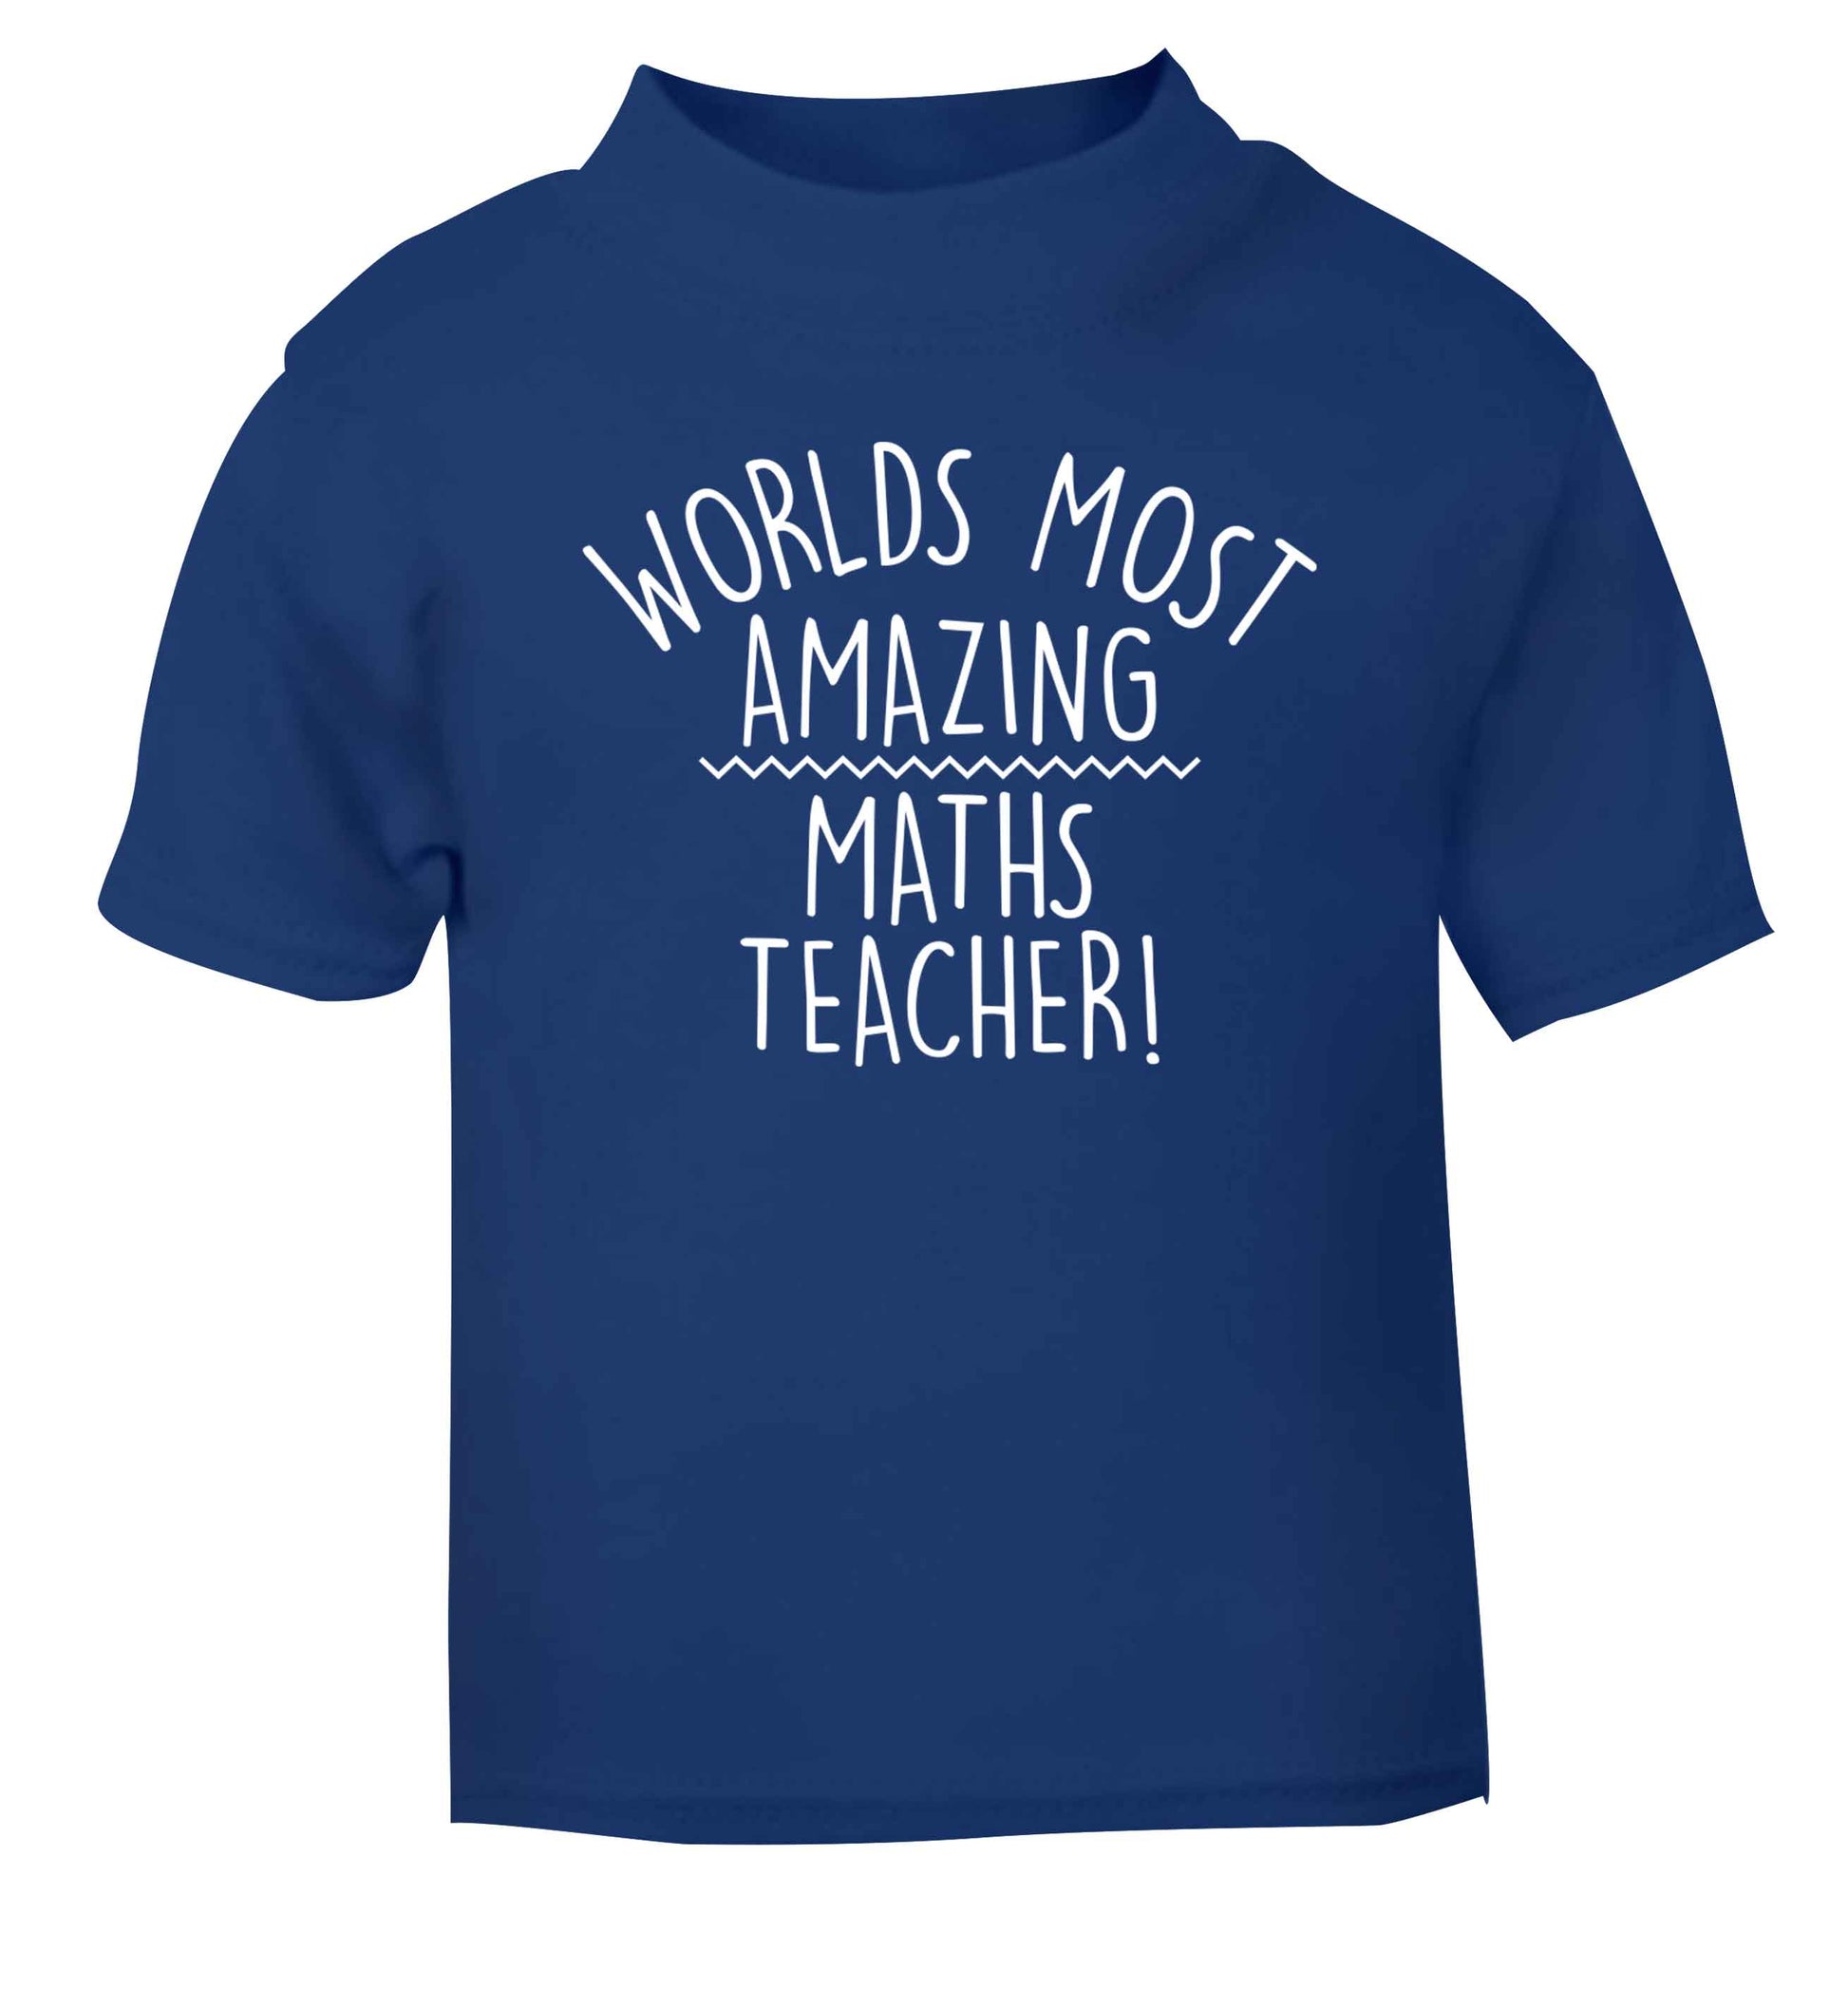 Worlds most amazing maths teacher blue baby toddler Tshirt 2 Years